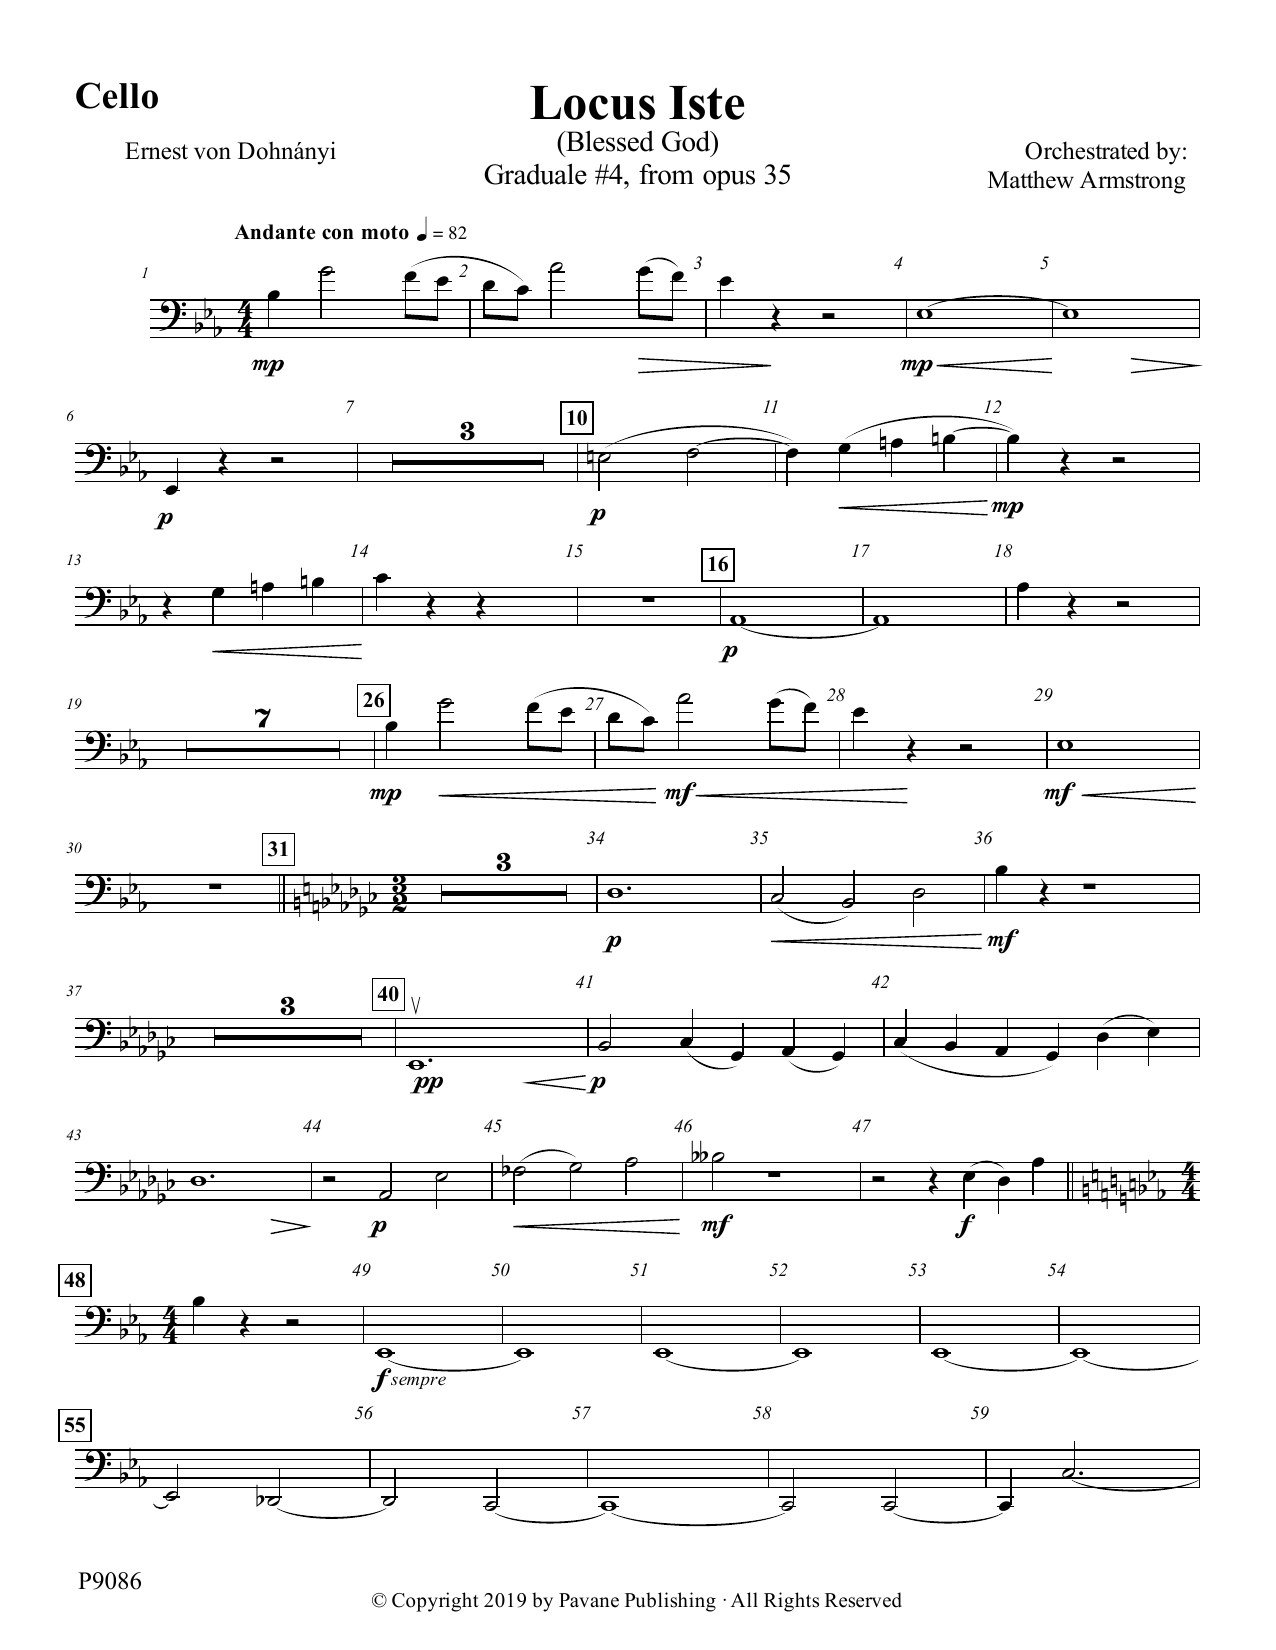 Matthew Armstrong Locus Iste - Cello Sheet Music Notes & Chords for Choir Instrumental Pak - Download or Print PDF